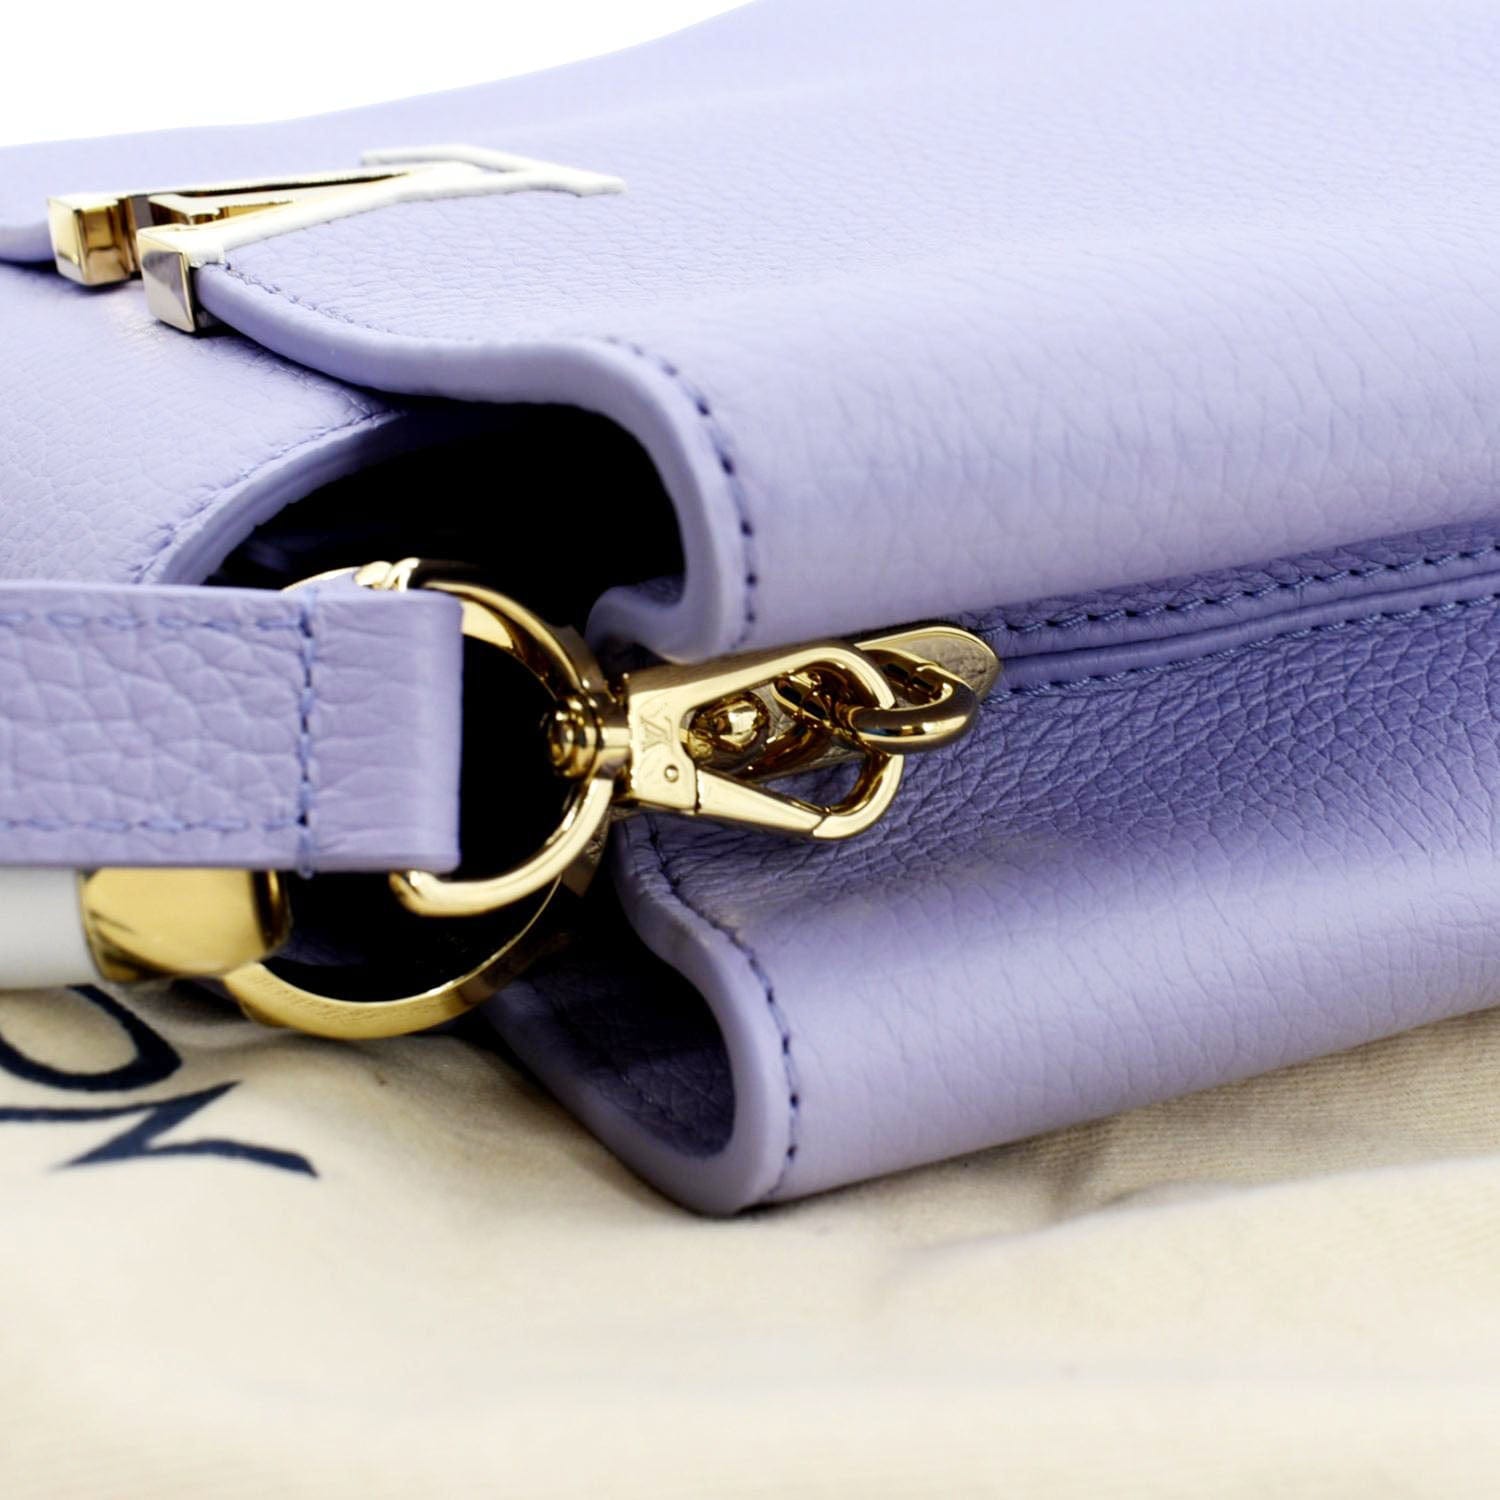 Louis Vuitton Purple Leather and Python Capucines BB Bag Louis